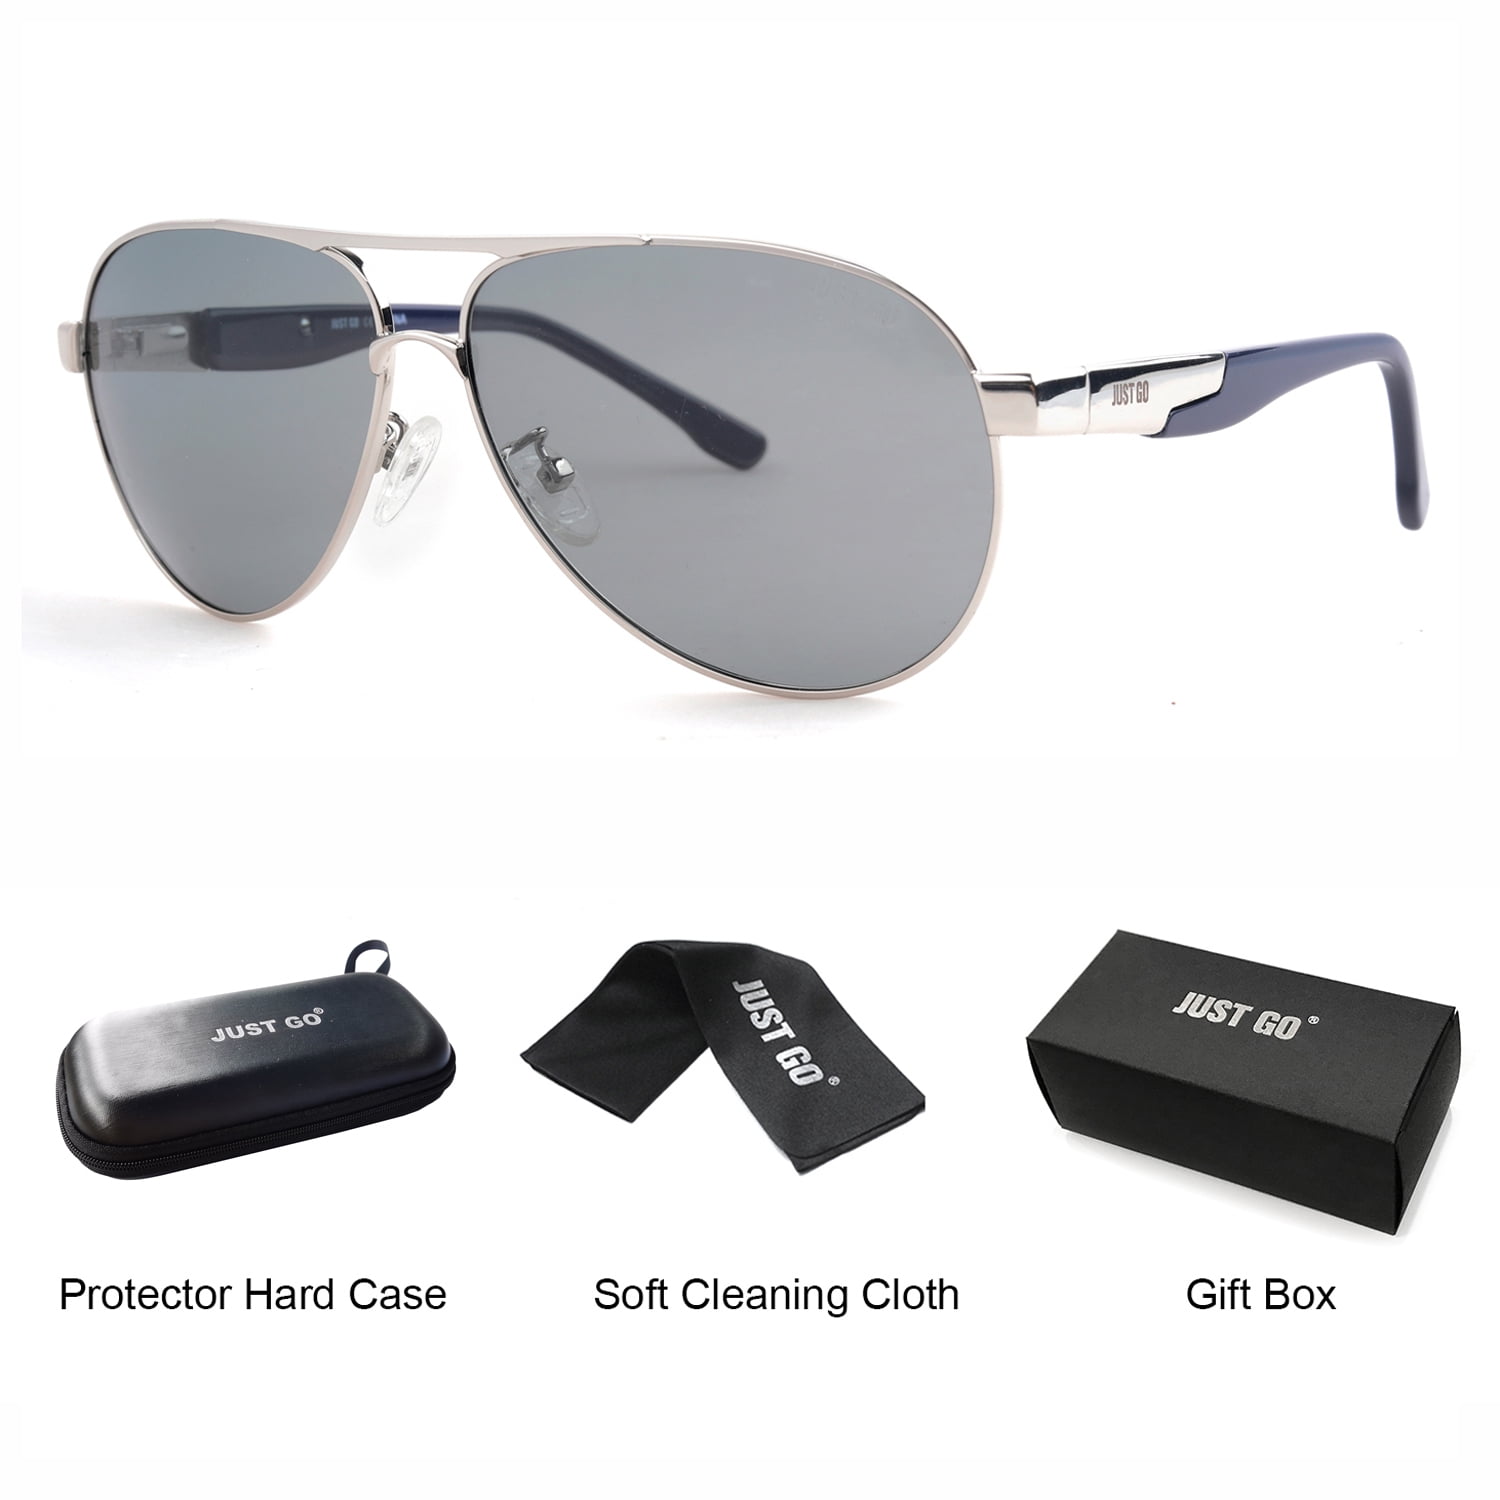 Polarized Retro Classic Square Frame Sunglasses Spring Hinges Mirror Lens UV 